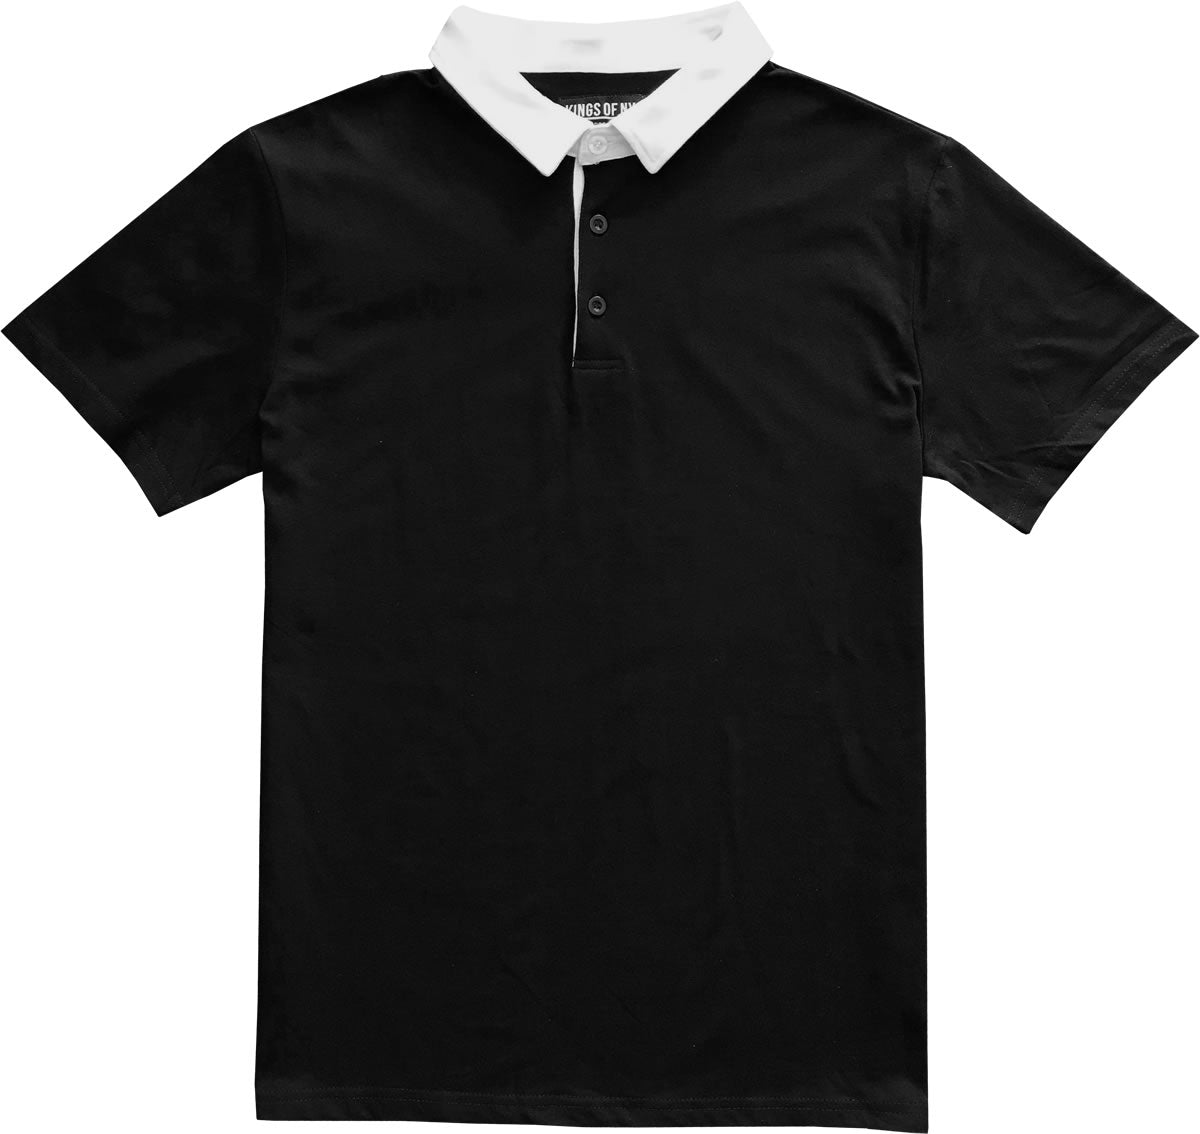 mens black shirt with white collar